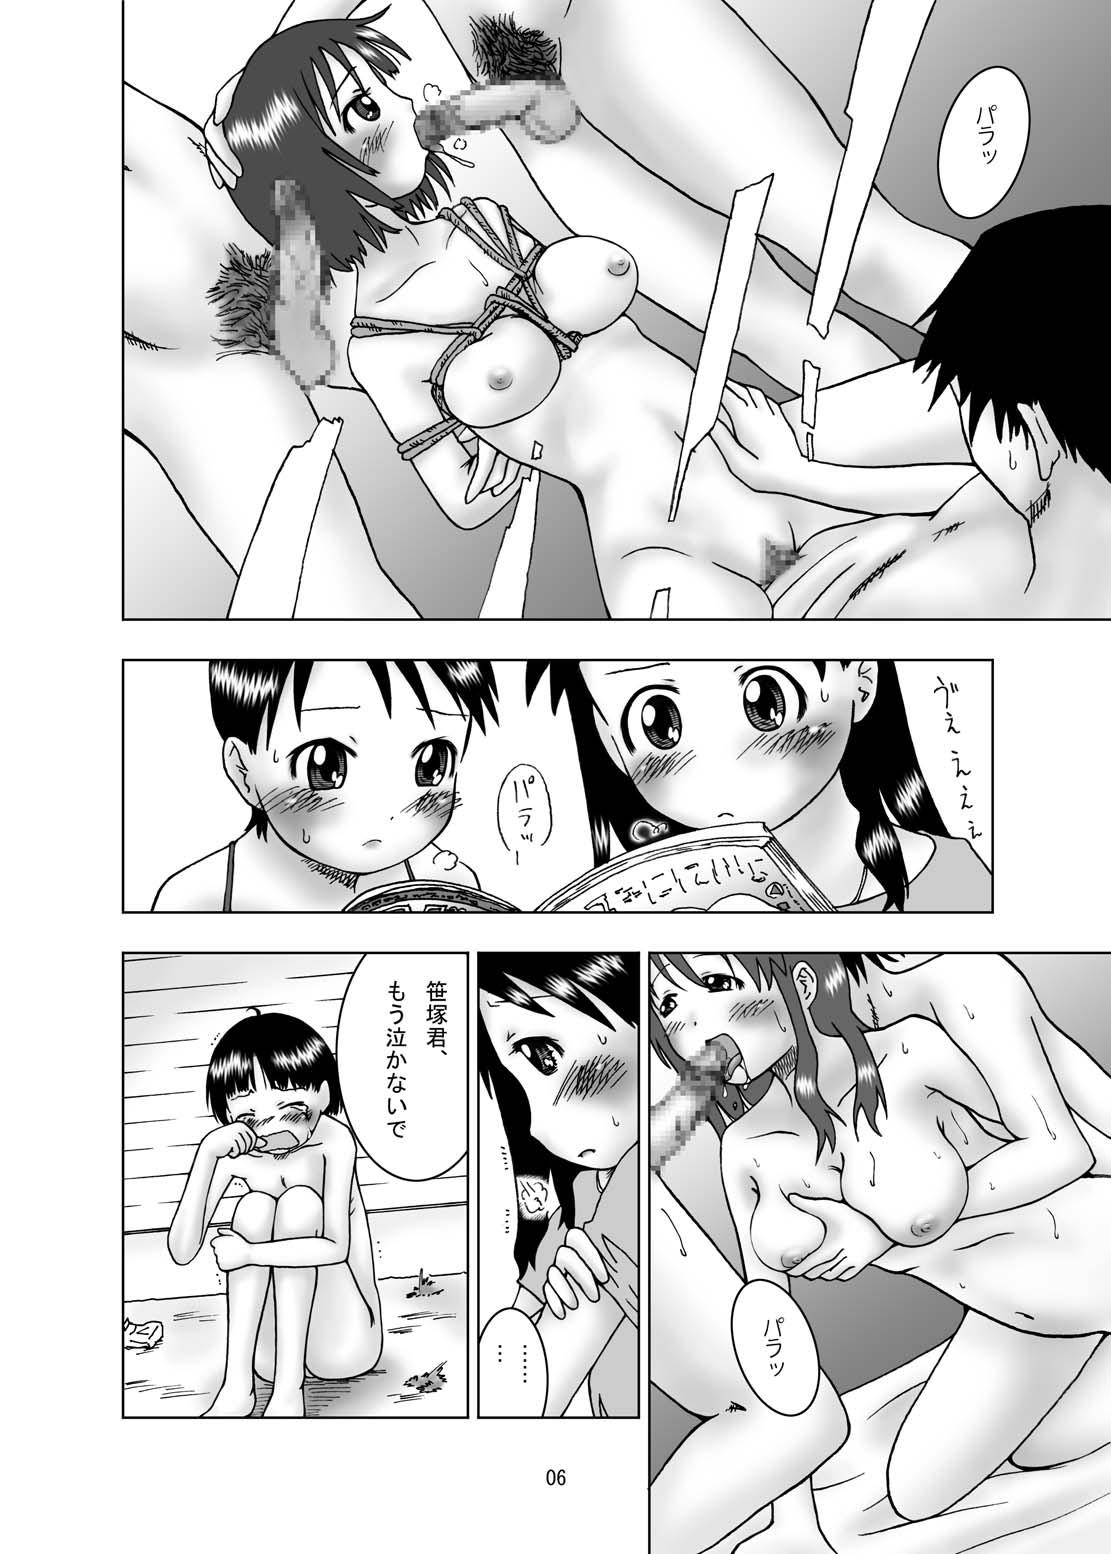 Rabuda Aya x Haya - Yotsubato Concha - Page 6